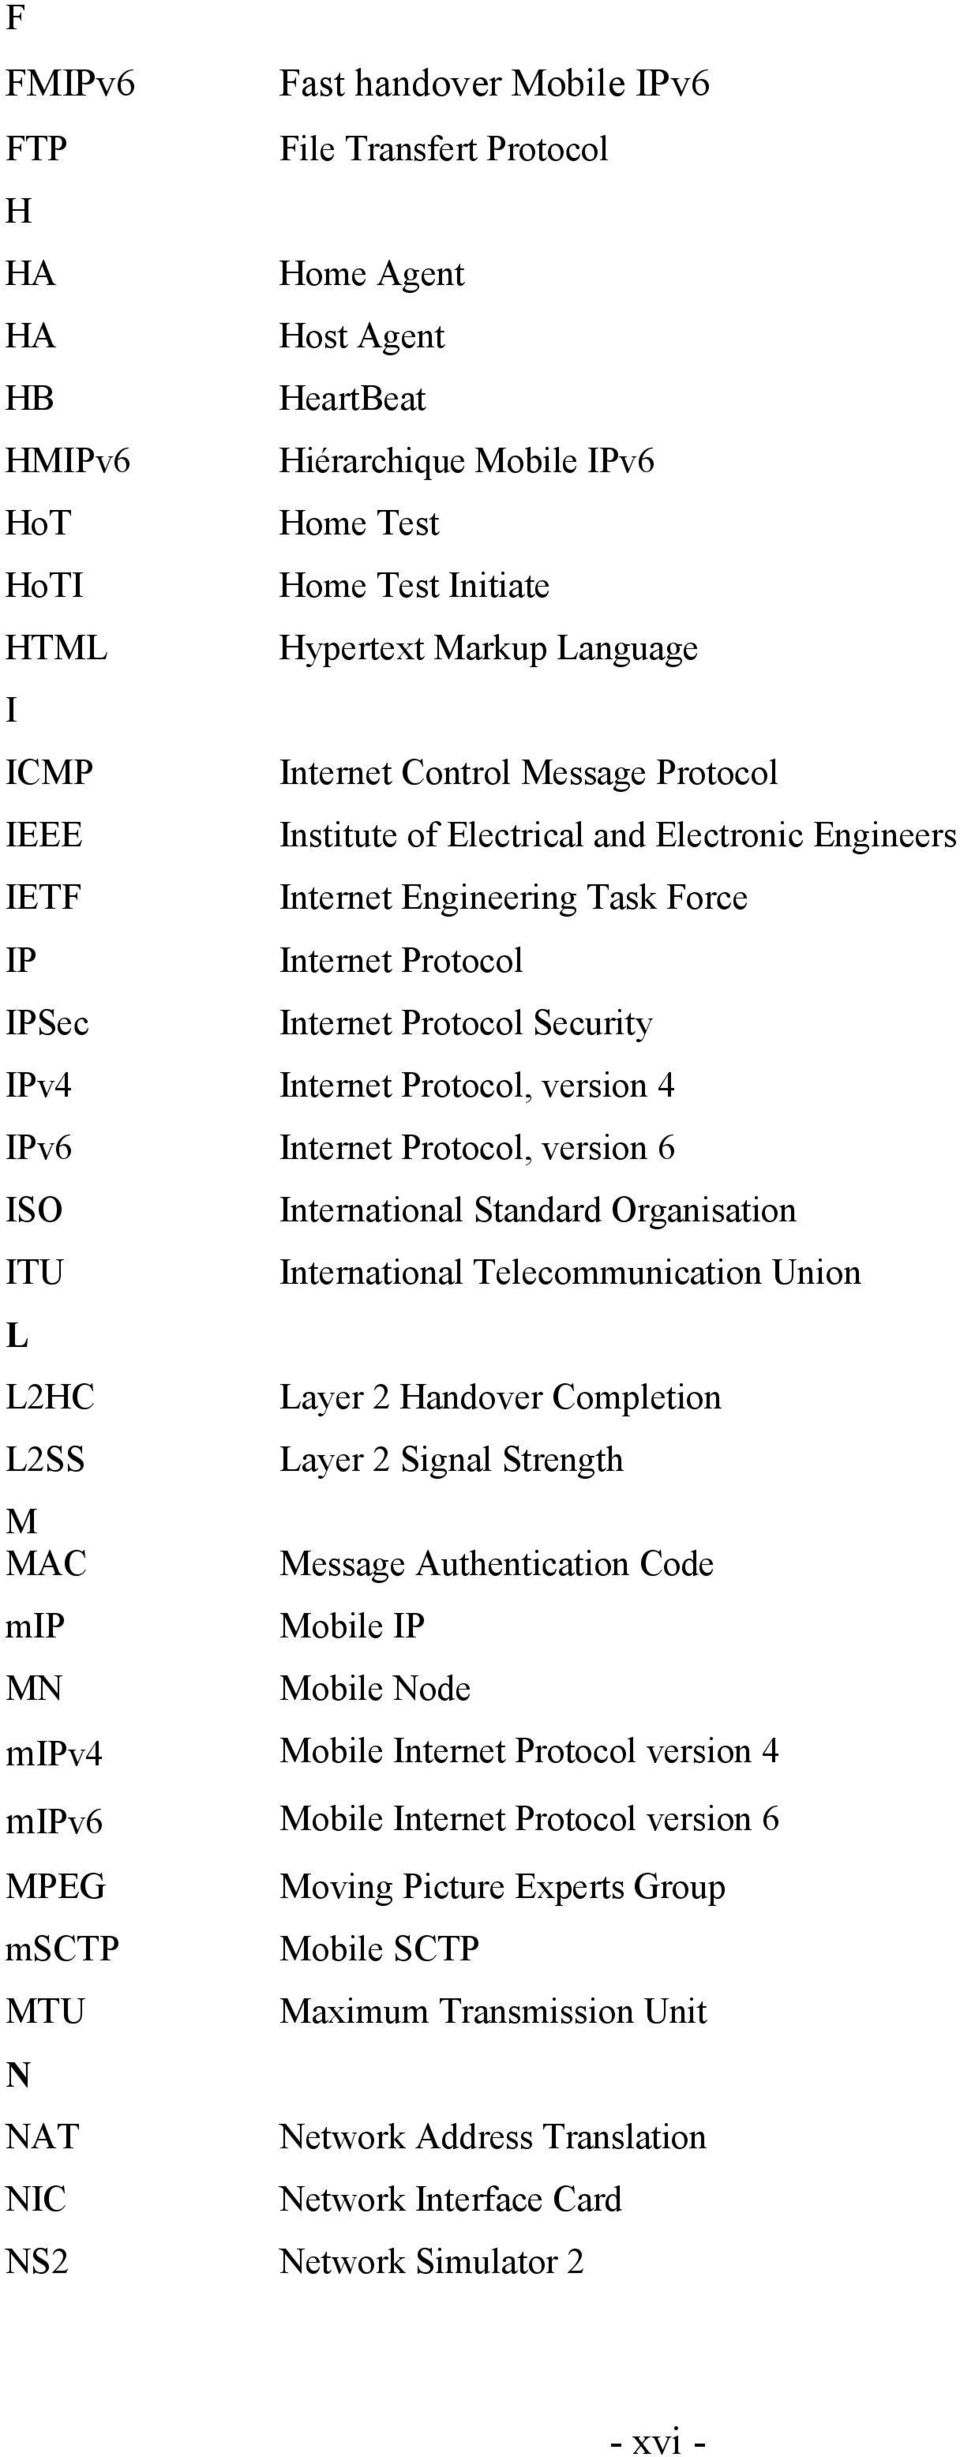 Internet Protocol, version 4 IPv6 Internet Protocol, version 6 ISO ITU L L2HC L2SS M MAC mip MN International Standard Organisation International Telecommunication Union Layer 2 Handover Completion